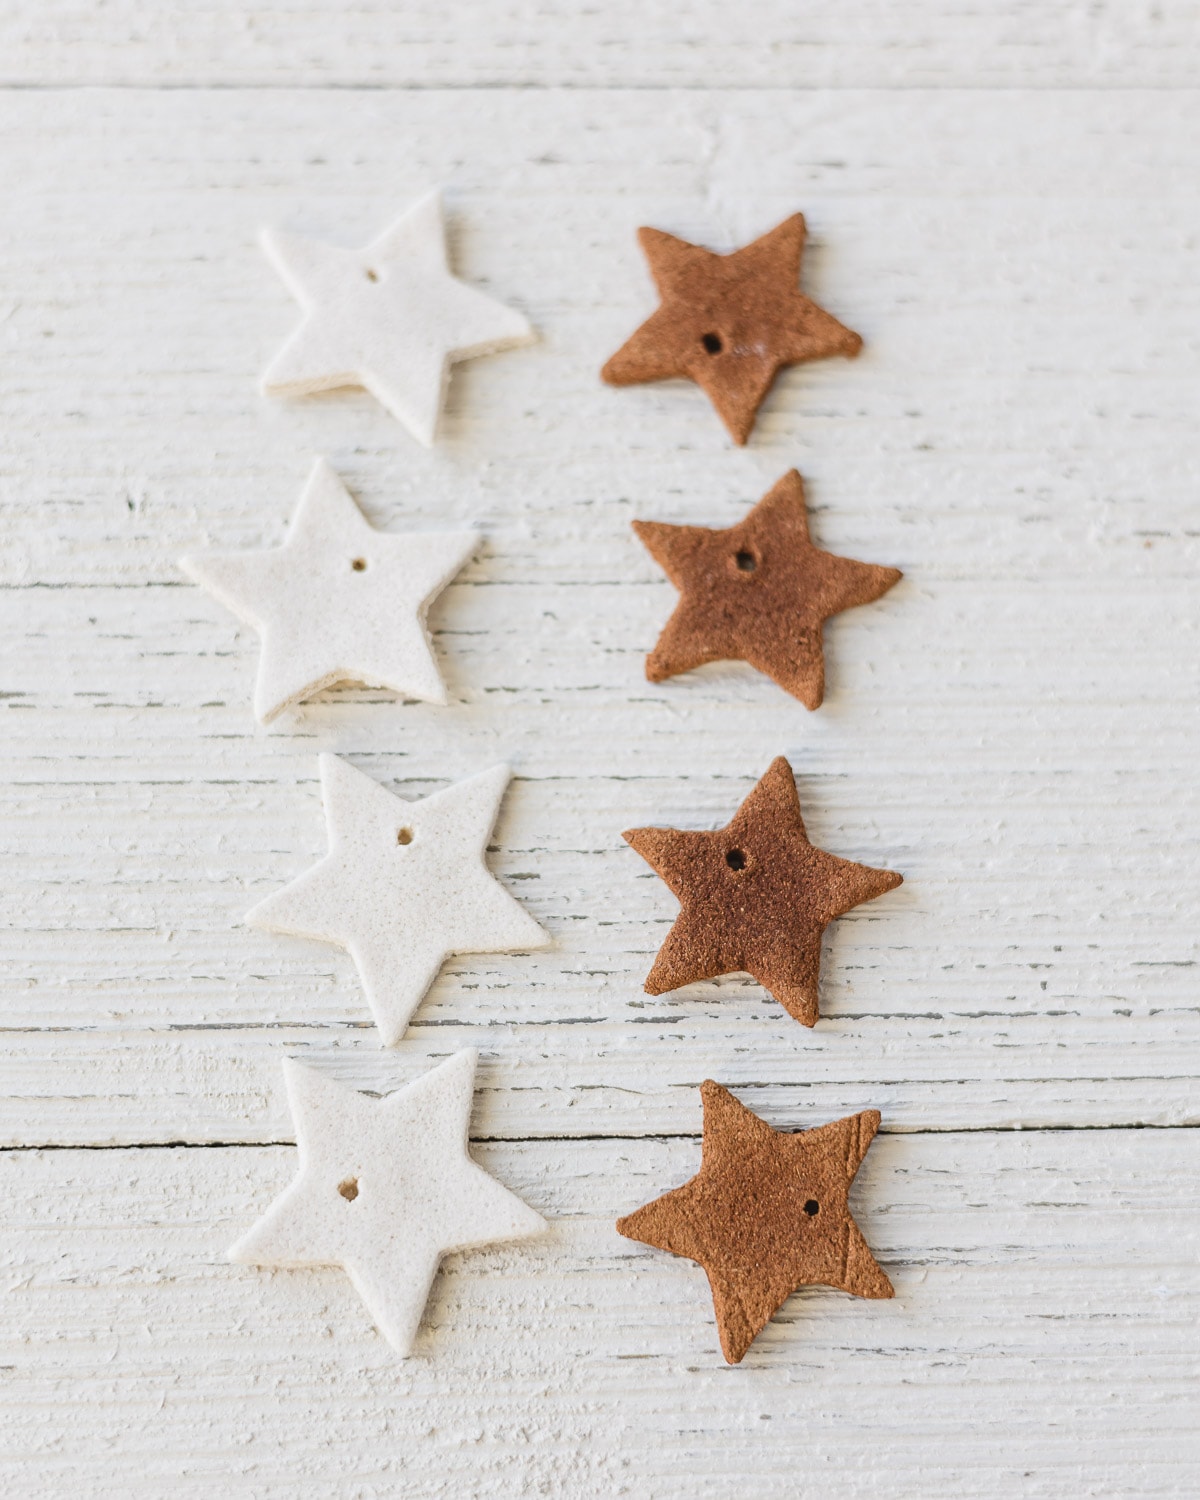 Salt dough star cutouts and cinnamon-applesauce star cutouts on a wooden surface.